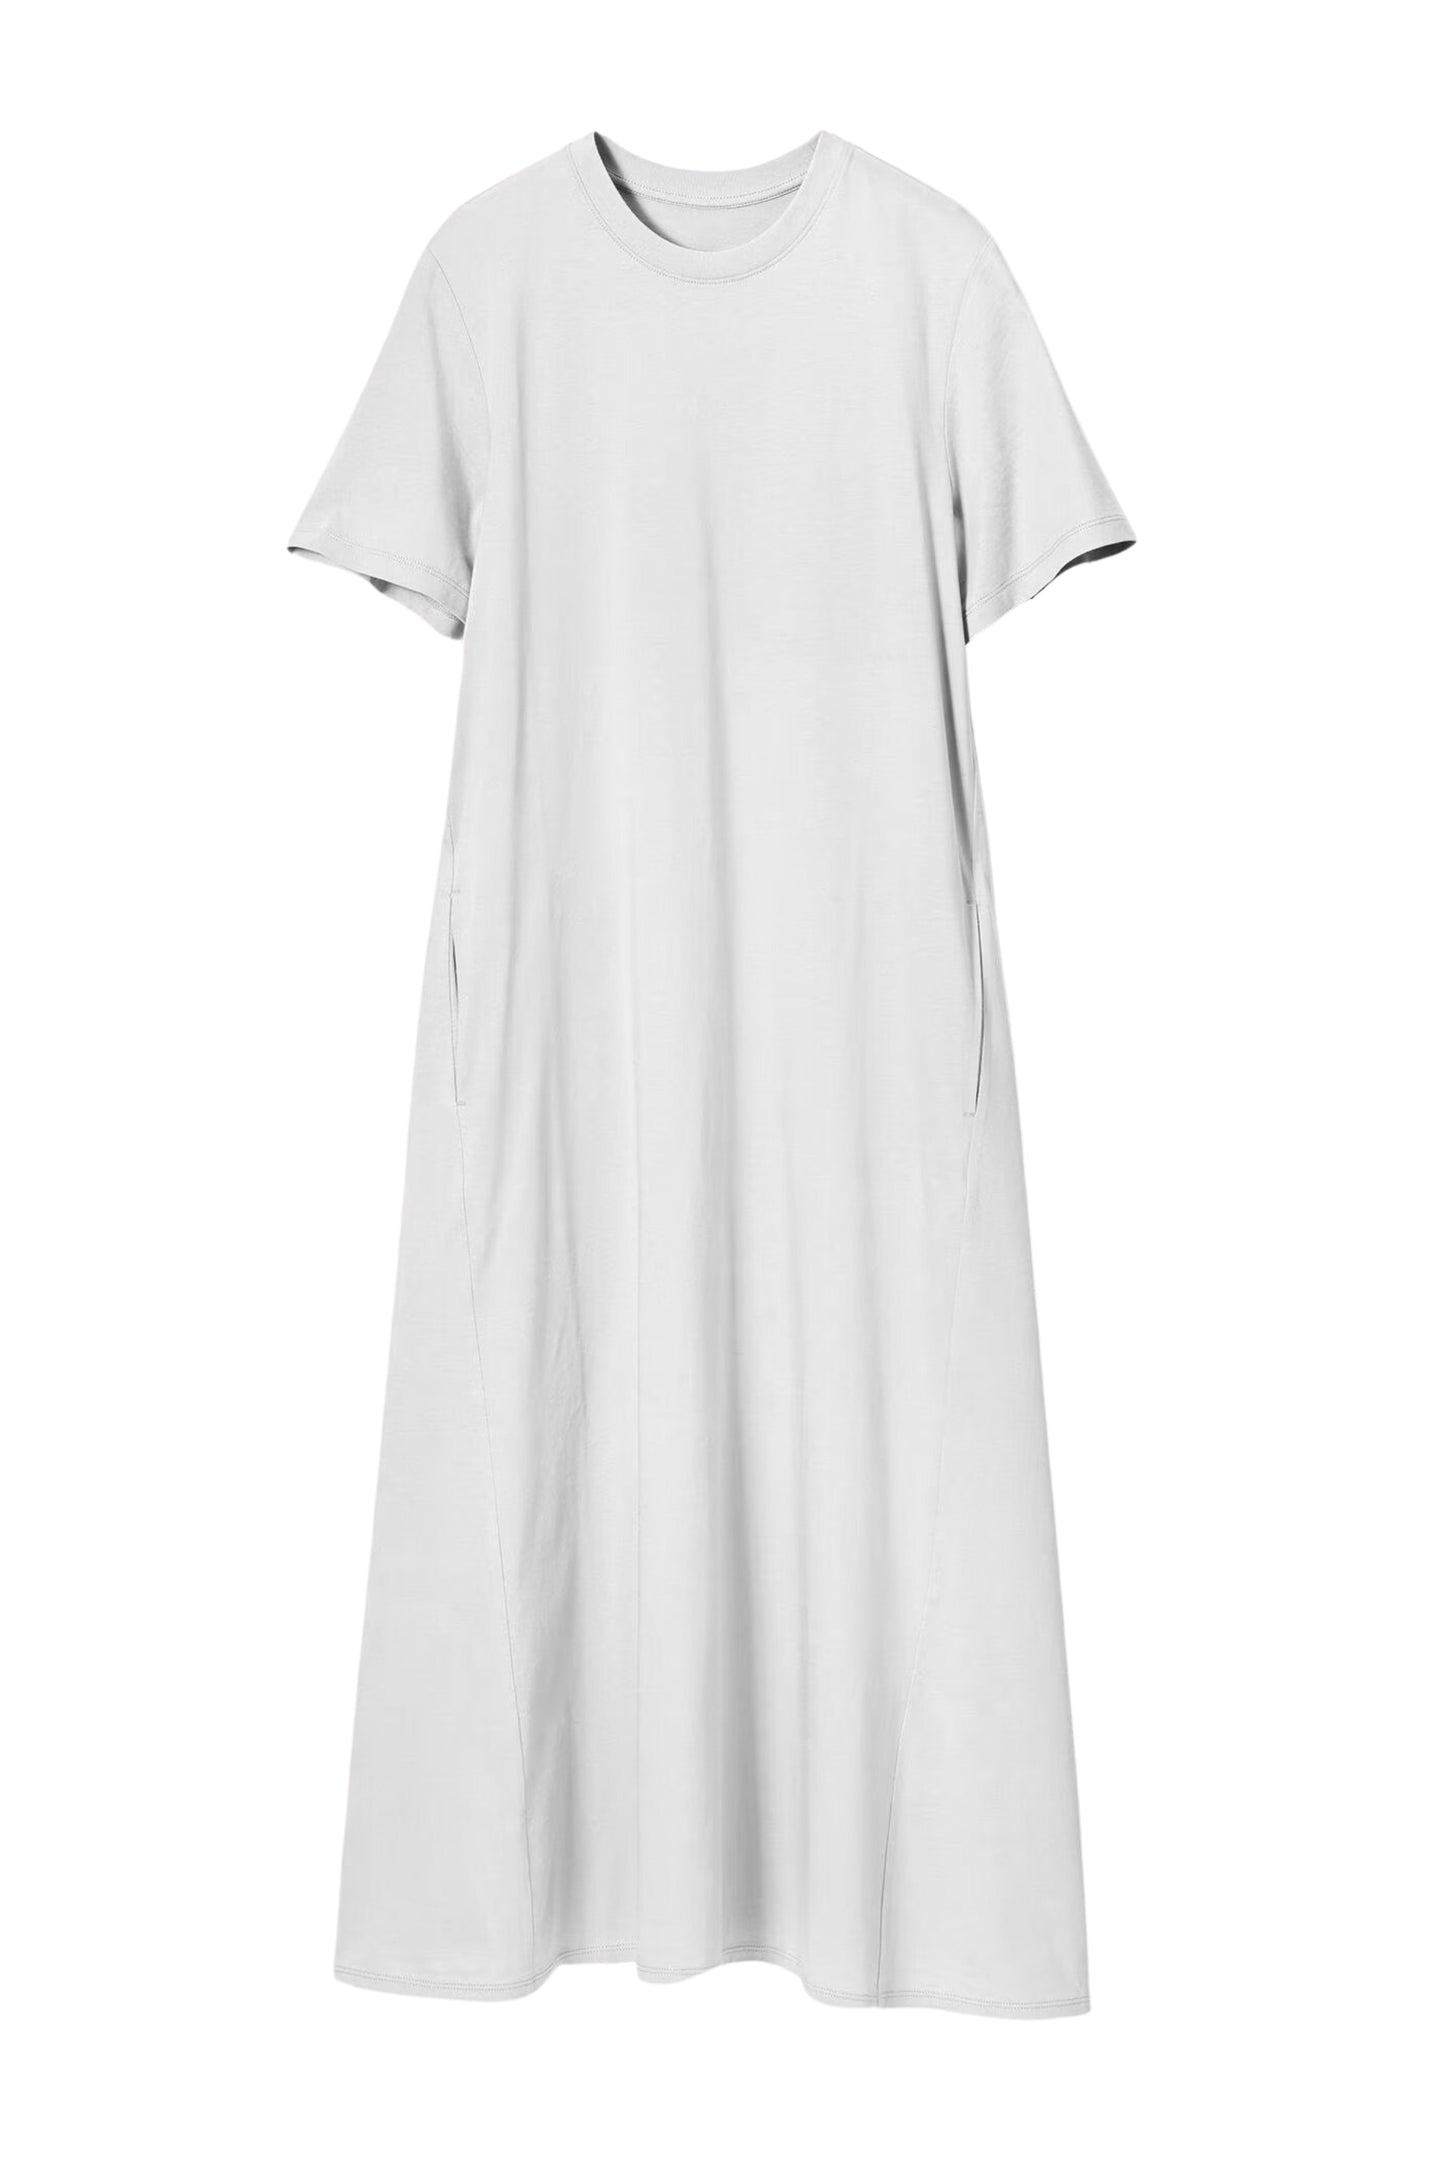 Women's Cotton Lycra Leisure Dress - White